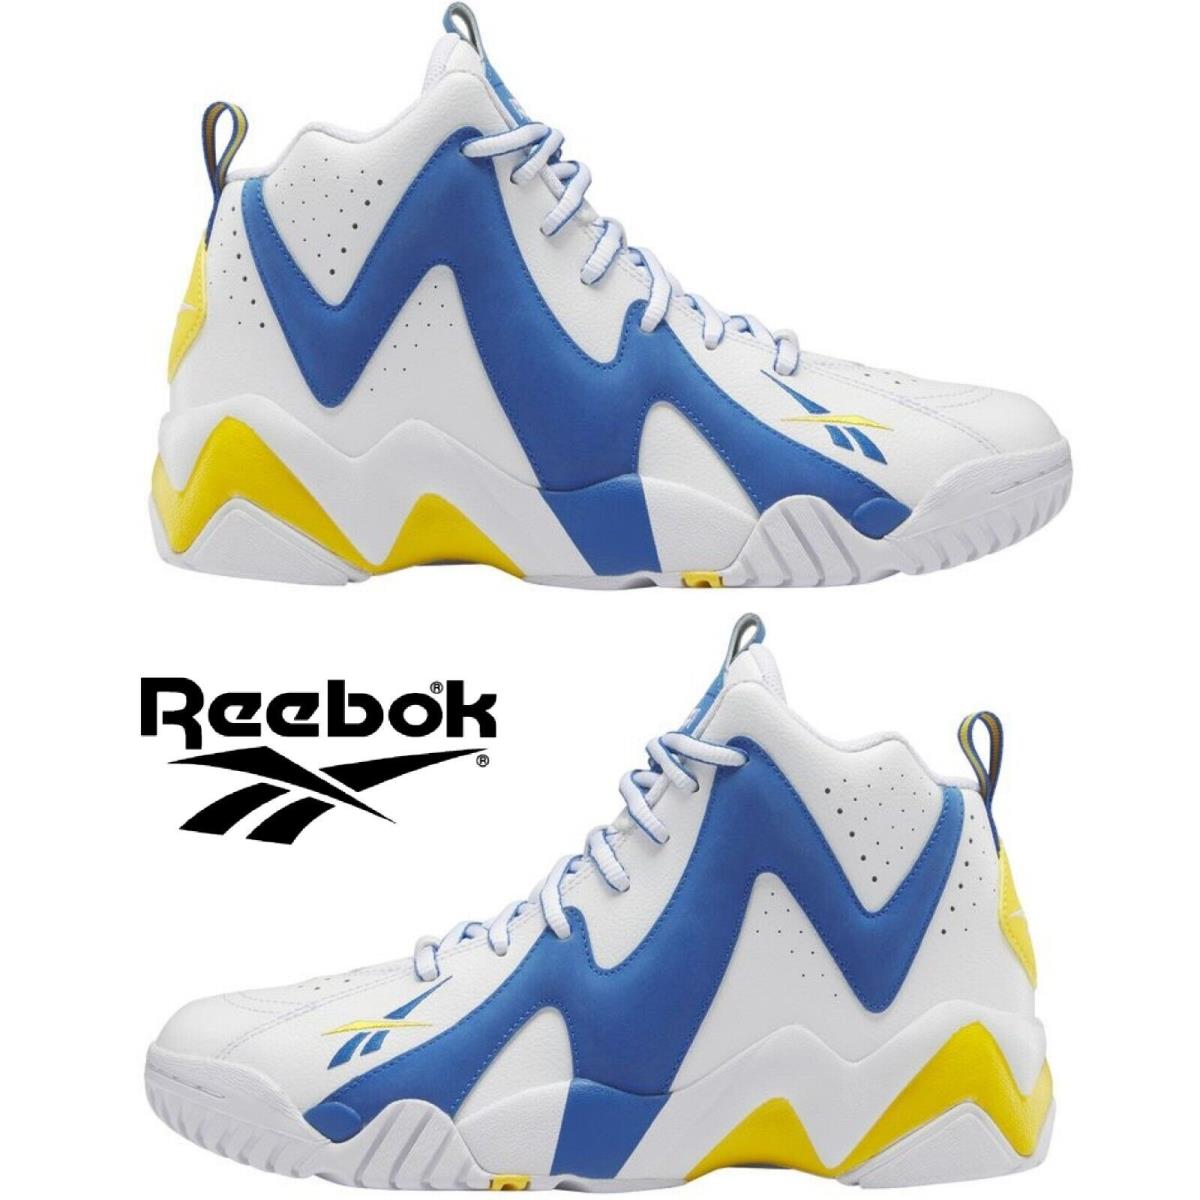 Reebok Hurrikaze II Basketball Shoes Men`s Sneakers Running Casual Sport White